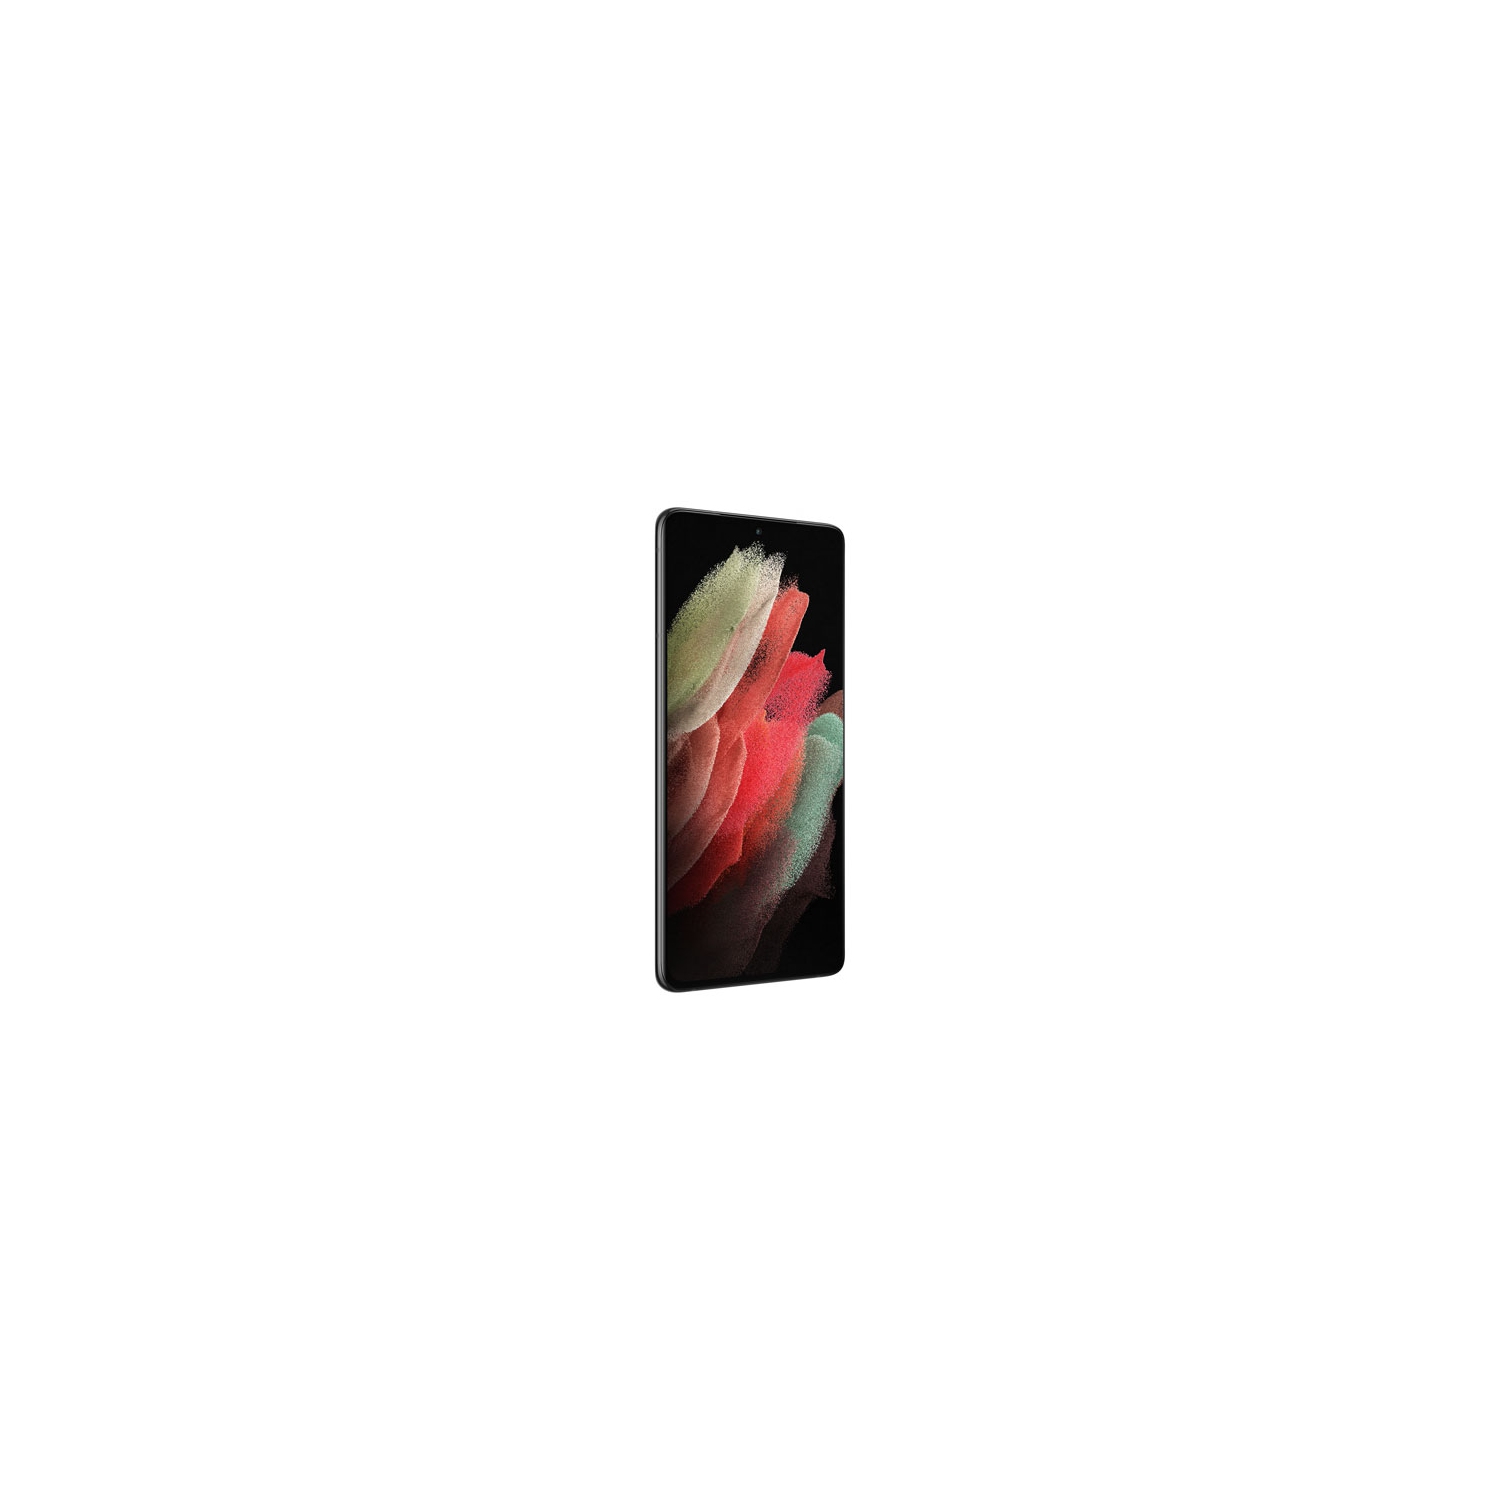 Refurbished (Good) - Samsung Galaxy S21 Ultra 5G 128GB - Phantom Black - Unlocked